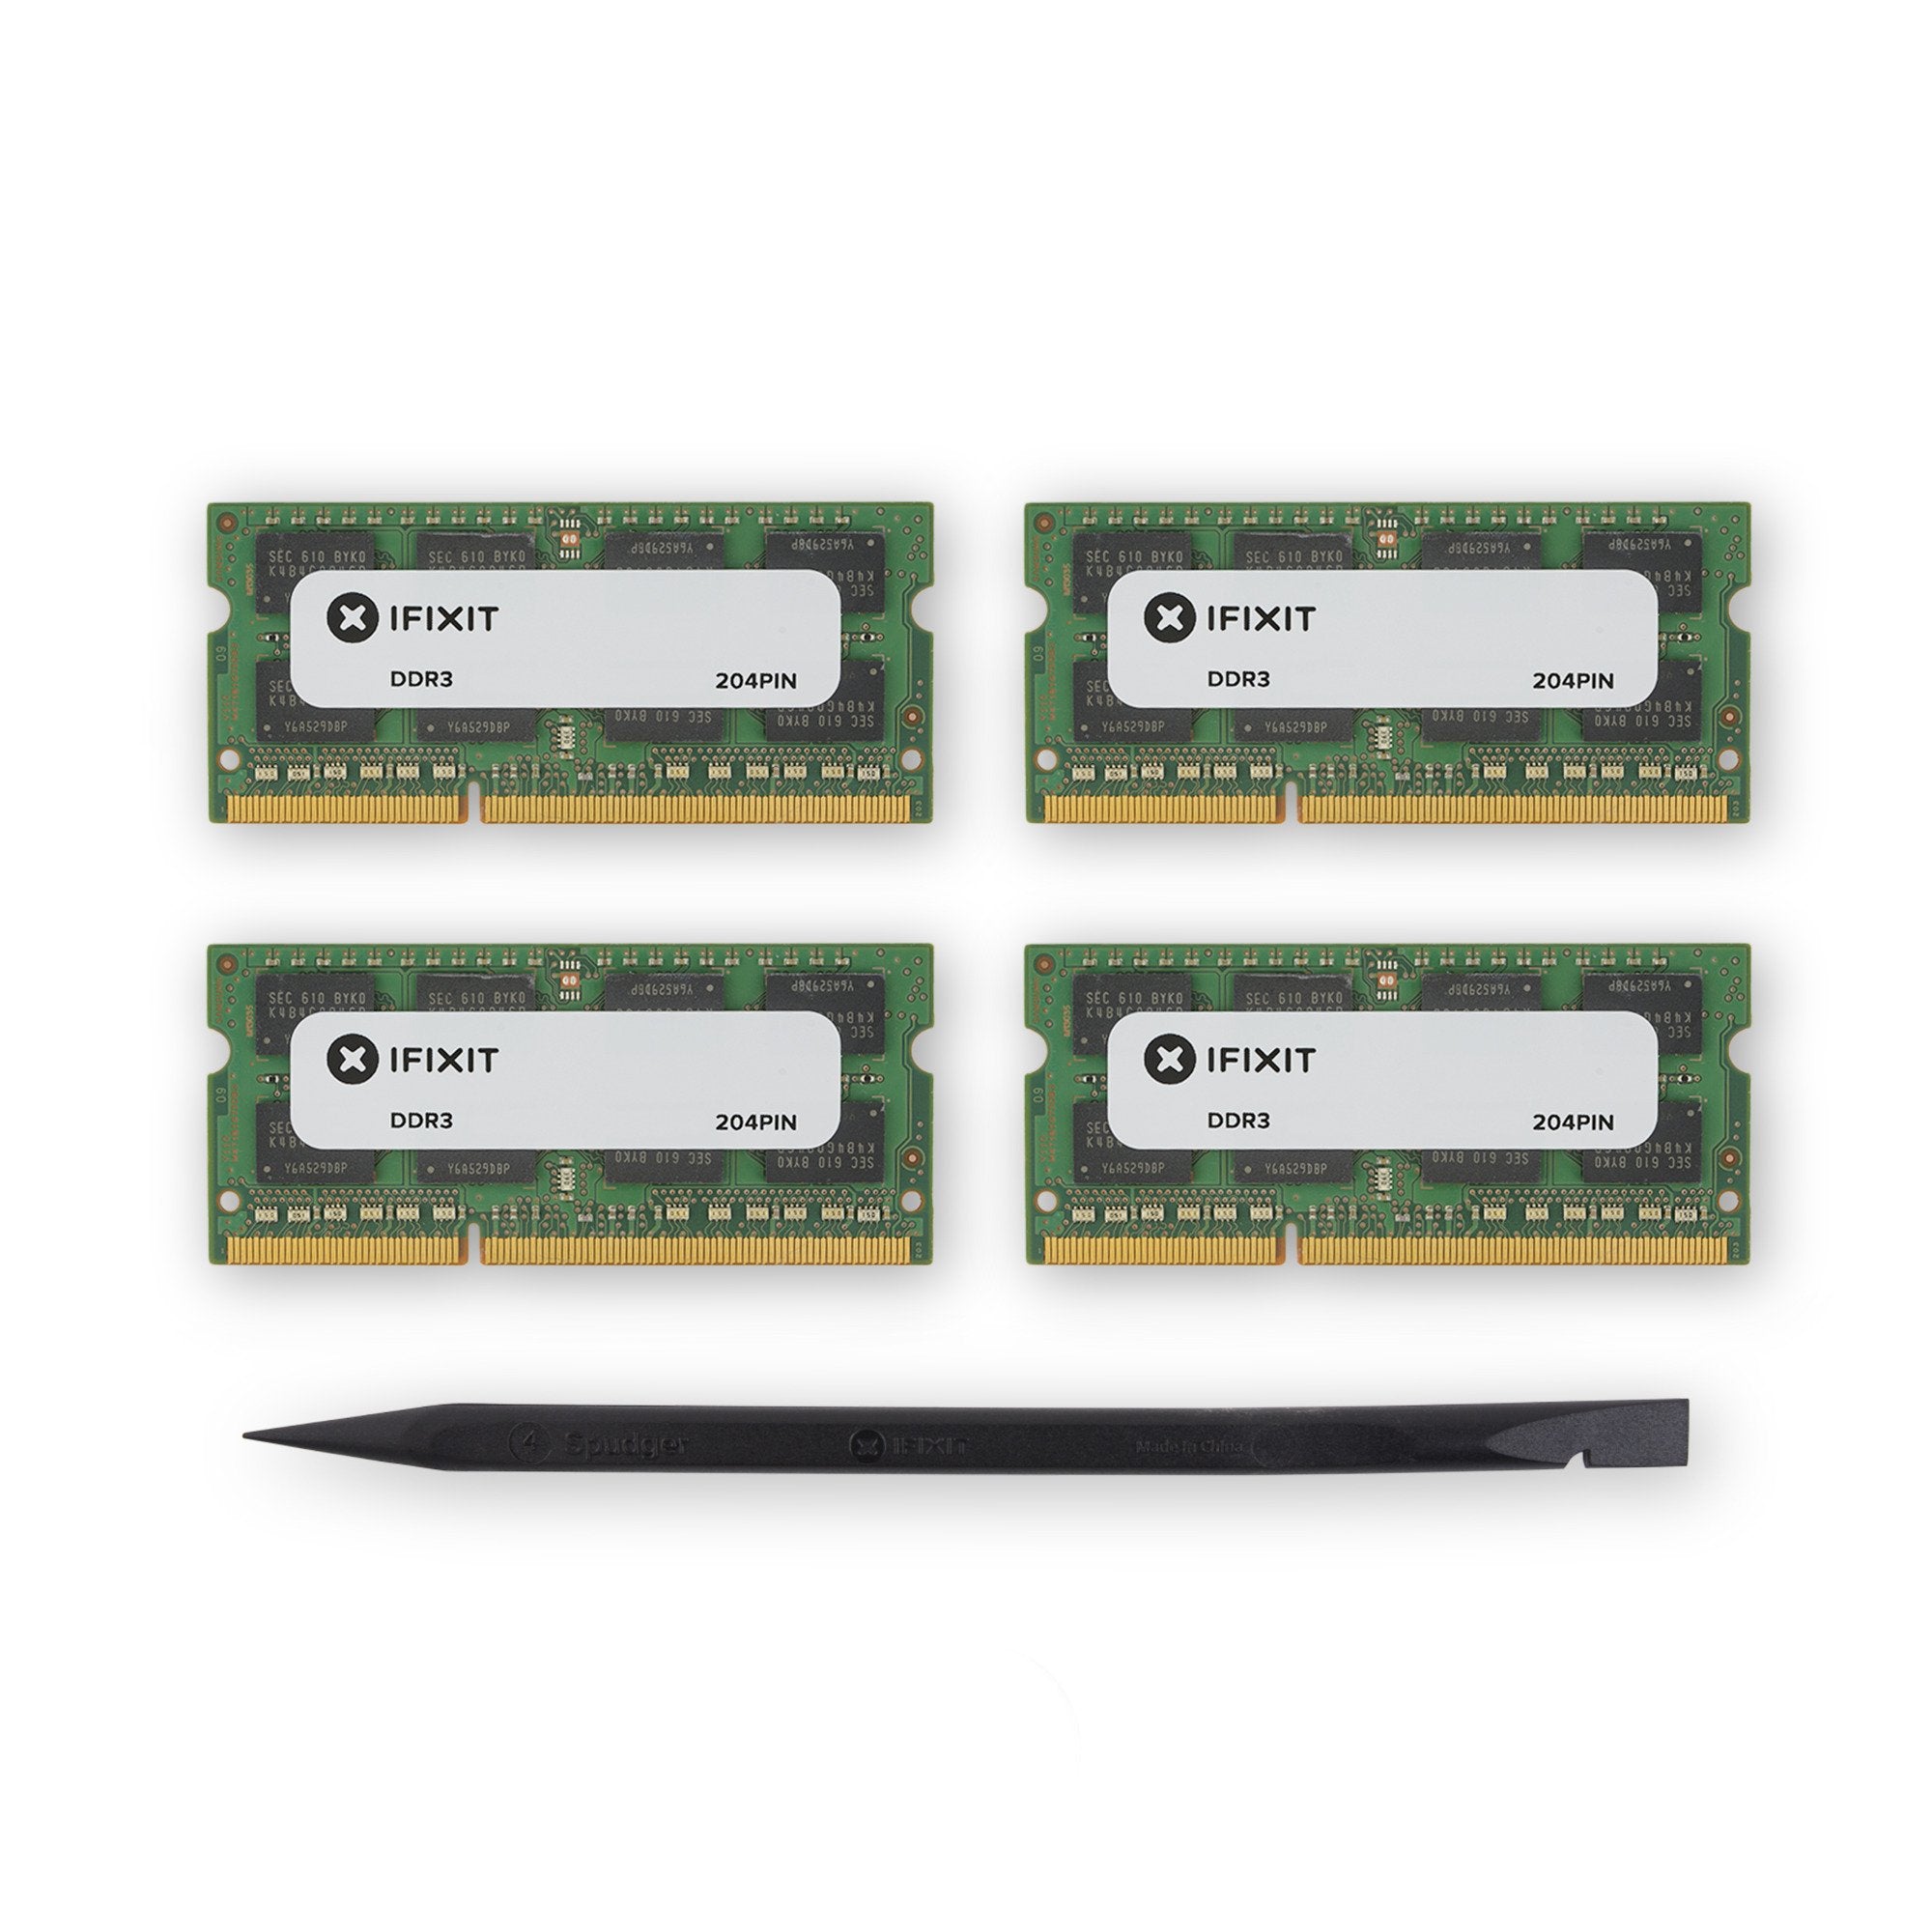 iMac 27" EMC 2806 (Late 2014 and Mid 2015, 5K Display) Memory Maxxer RAM Upgrade Kit